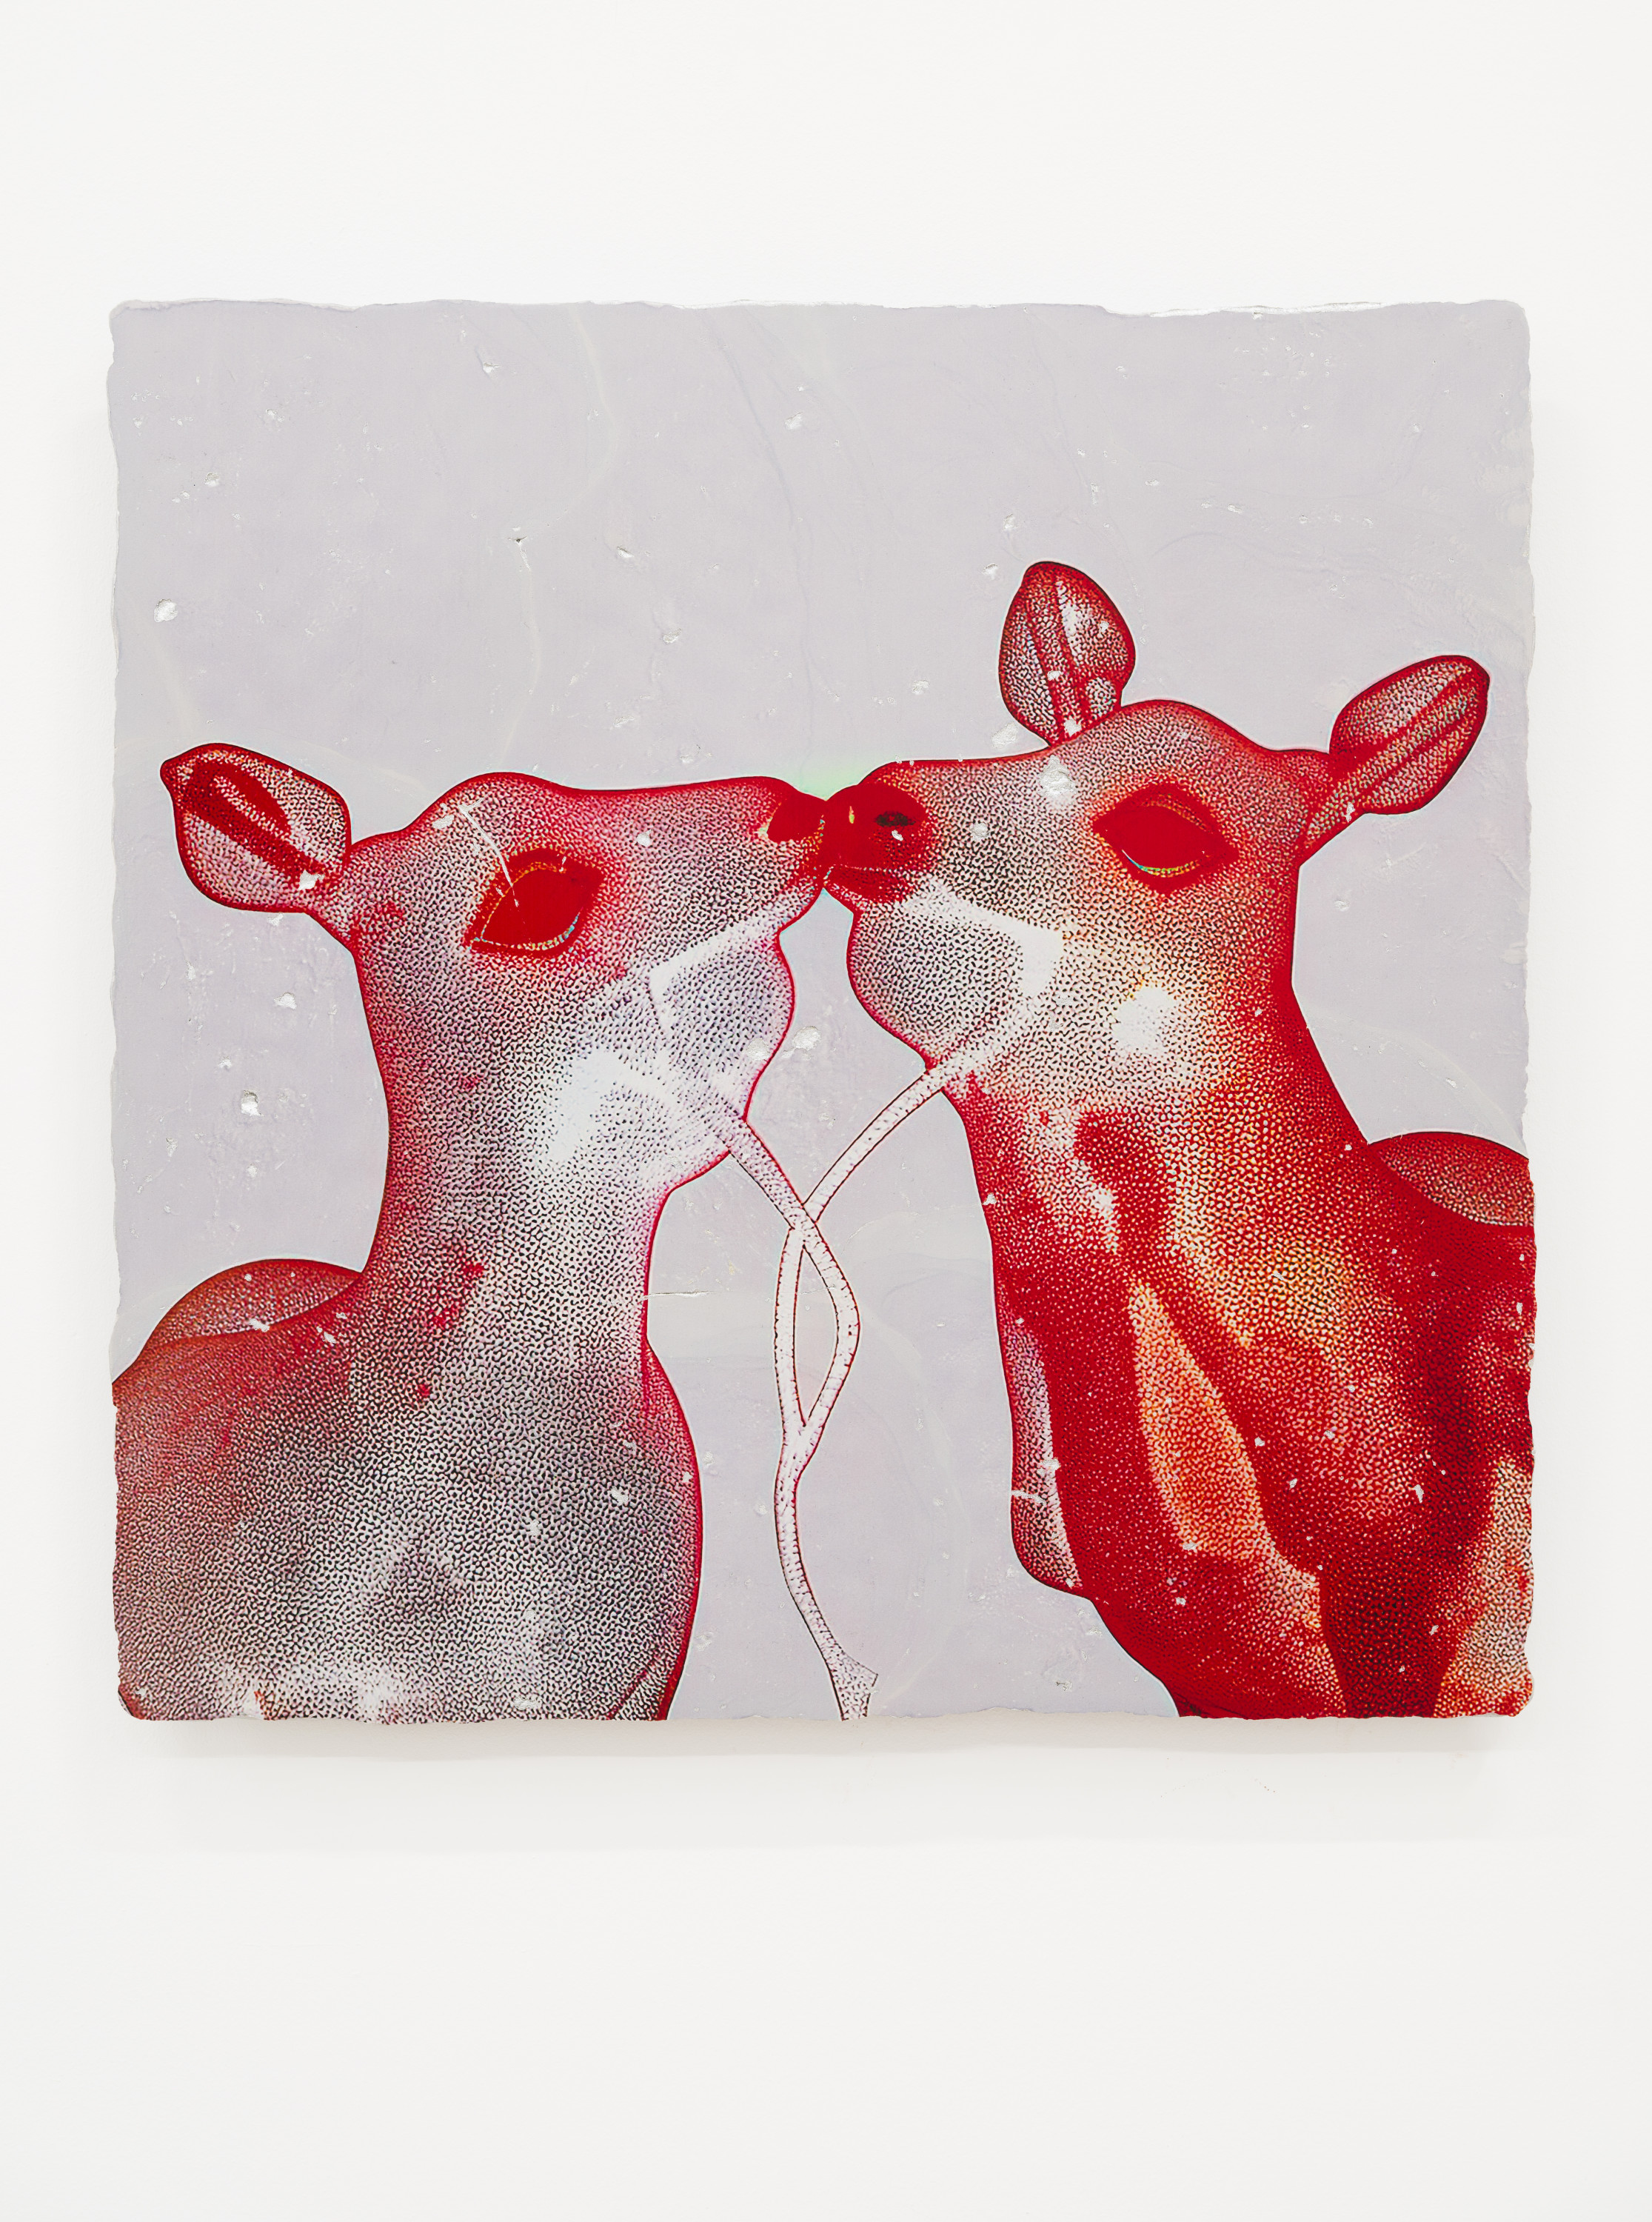 Katja Novitskova "Earthware (Random Forest, Deer Kiss 05)"